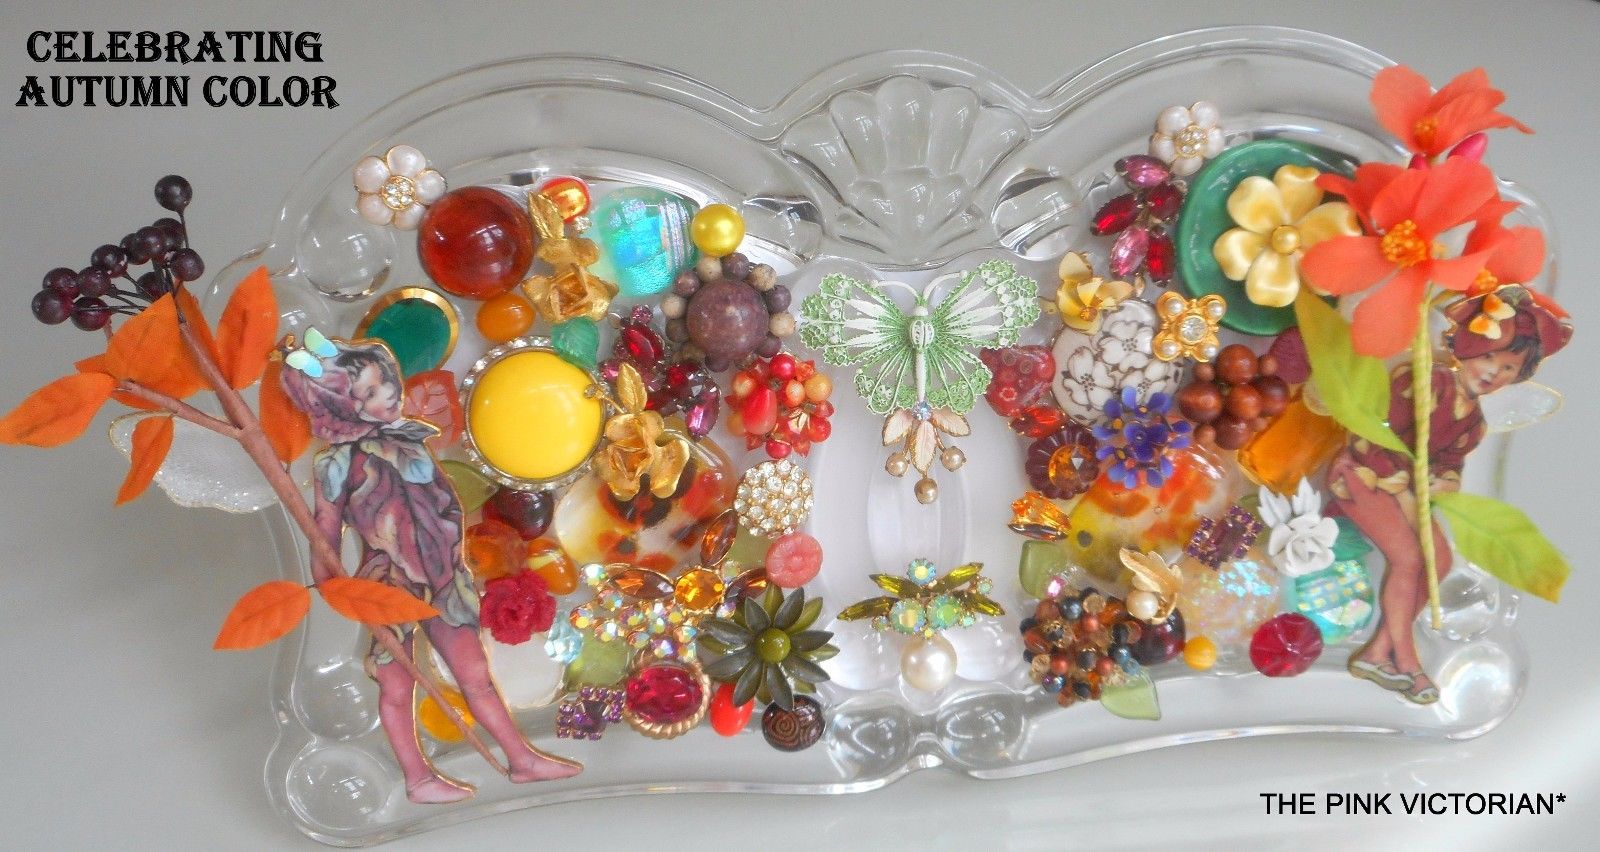 OOAK handmade mixed media VINTAGE JEWELRY collage Crystal GLASS FRAME art work